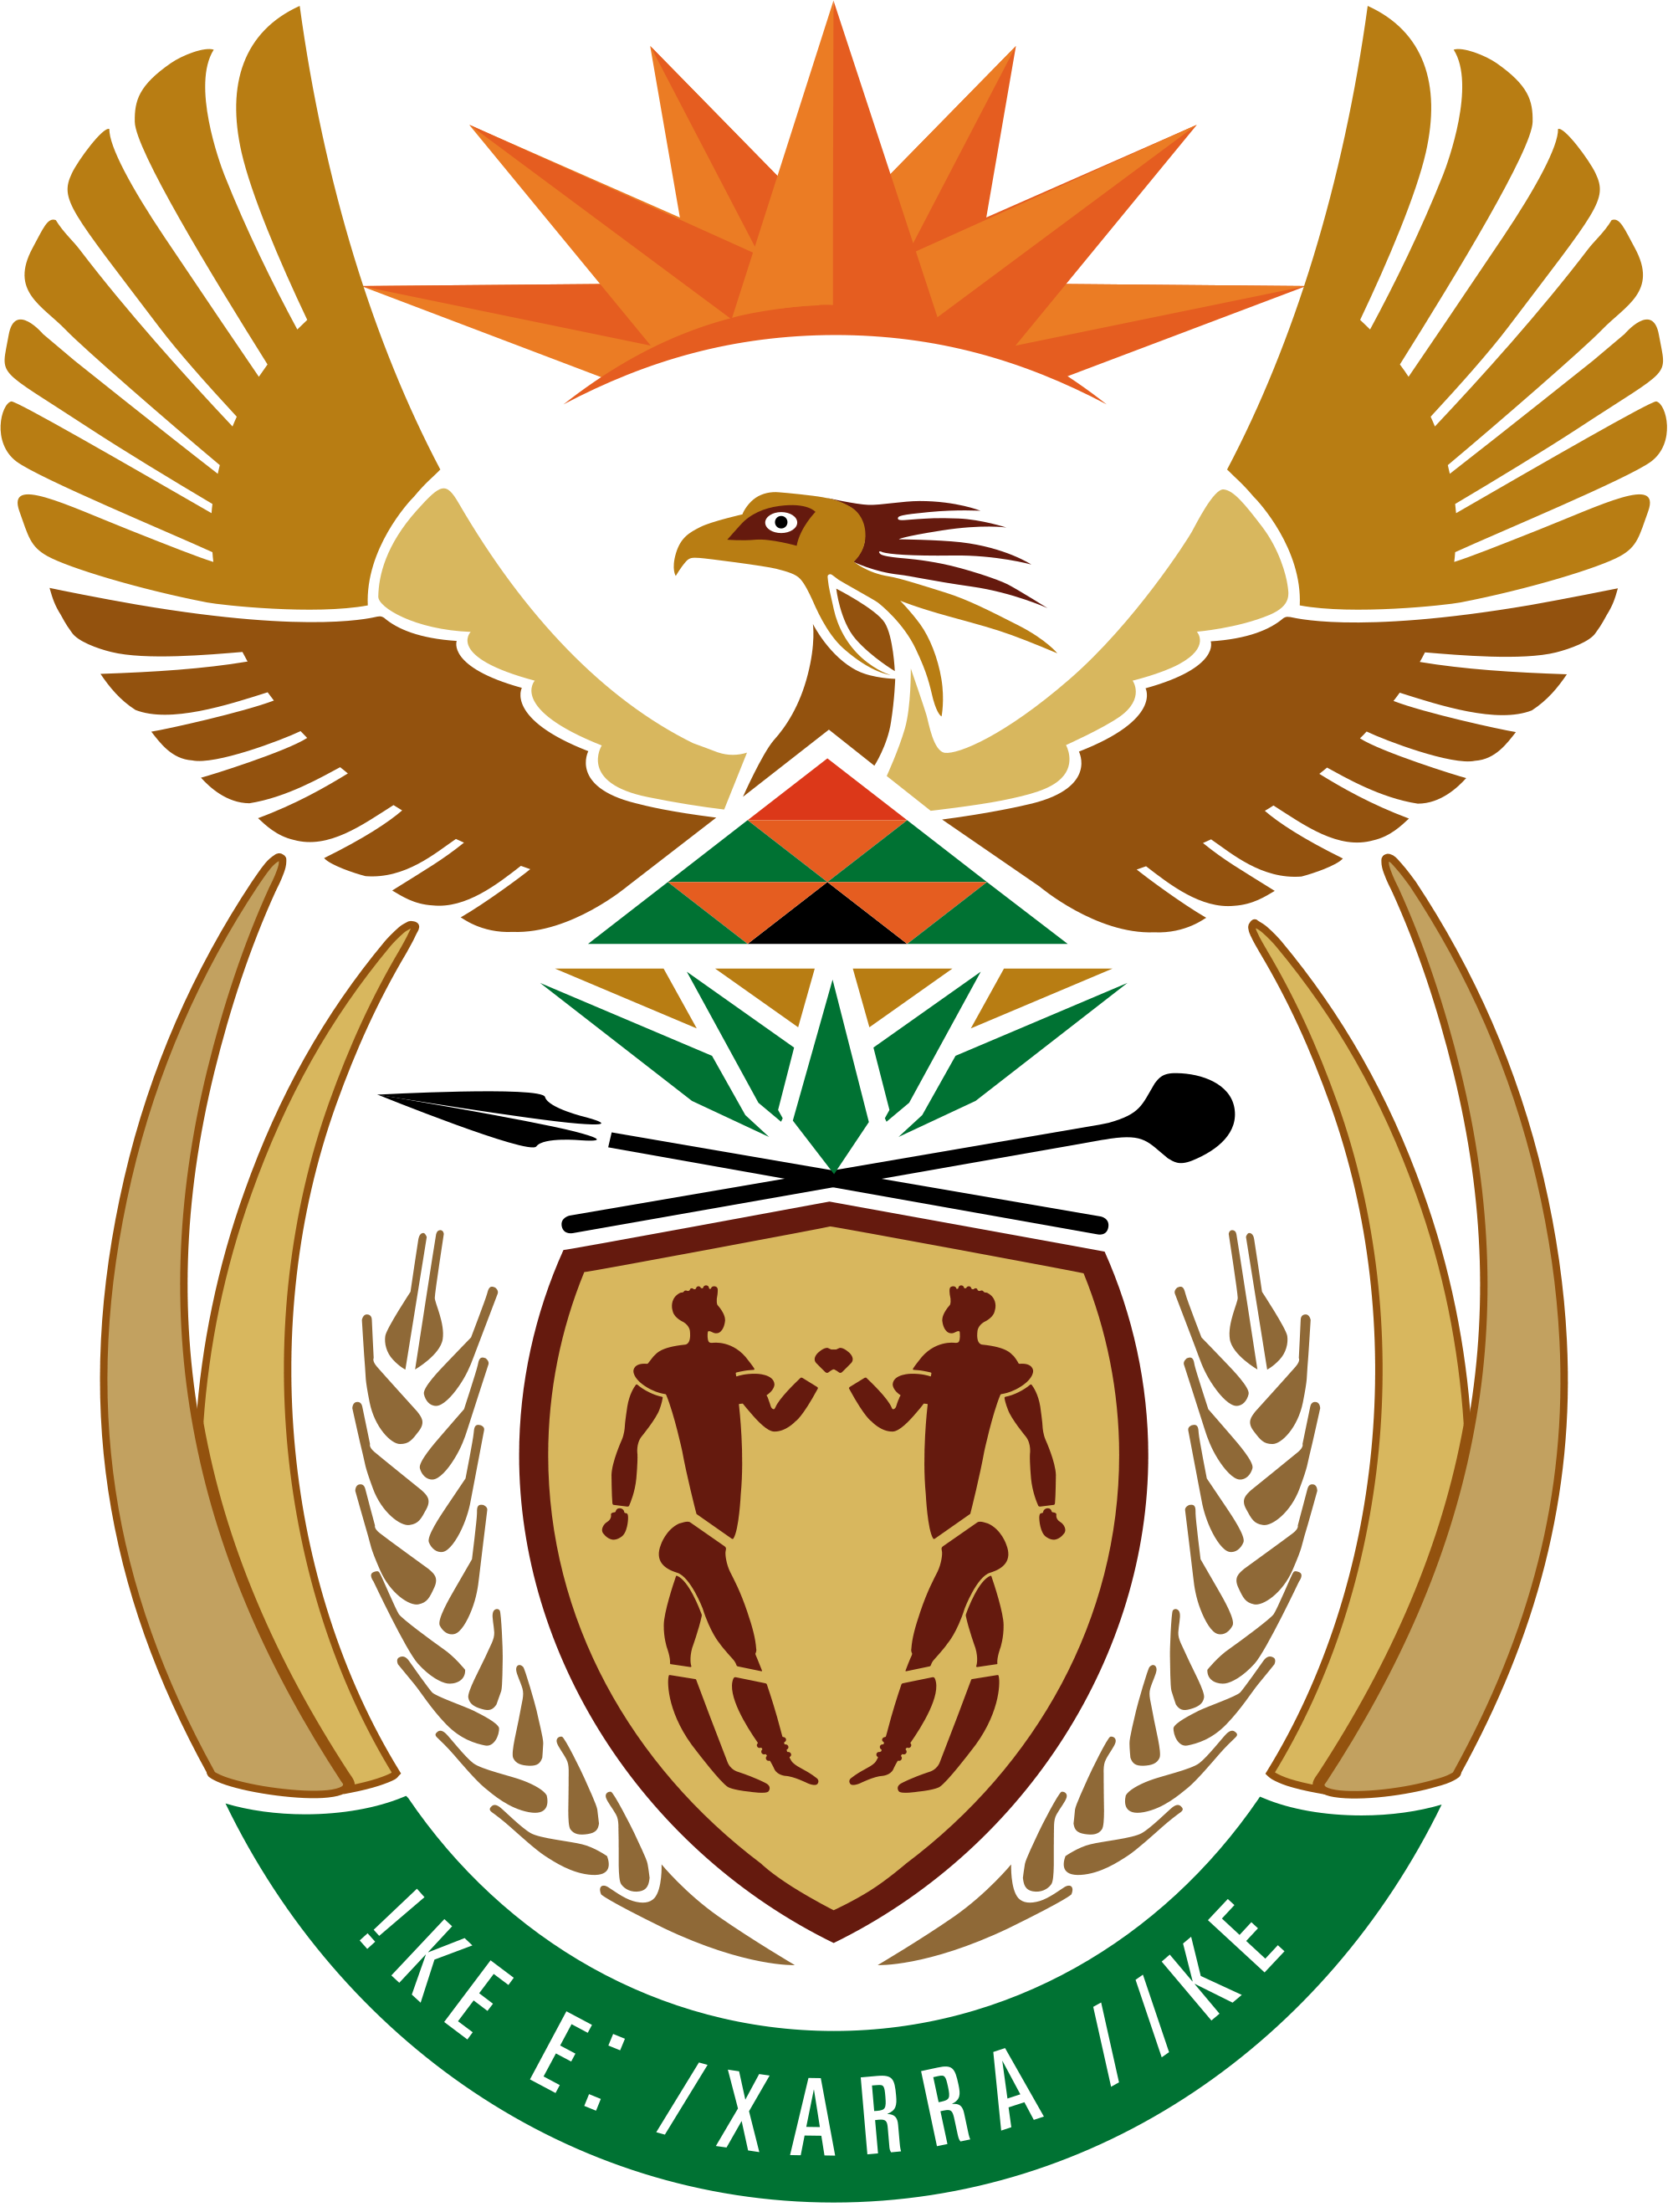 Emblem of South Africa